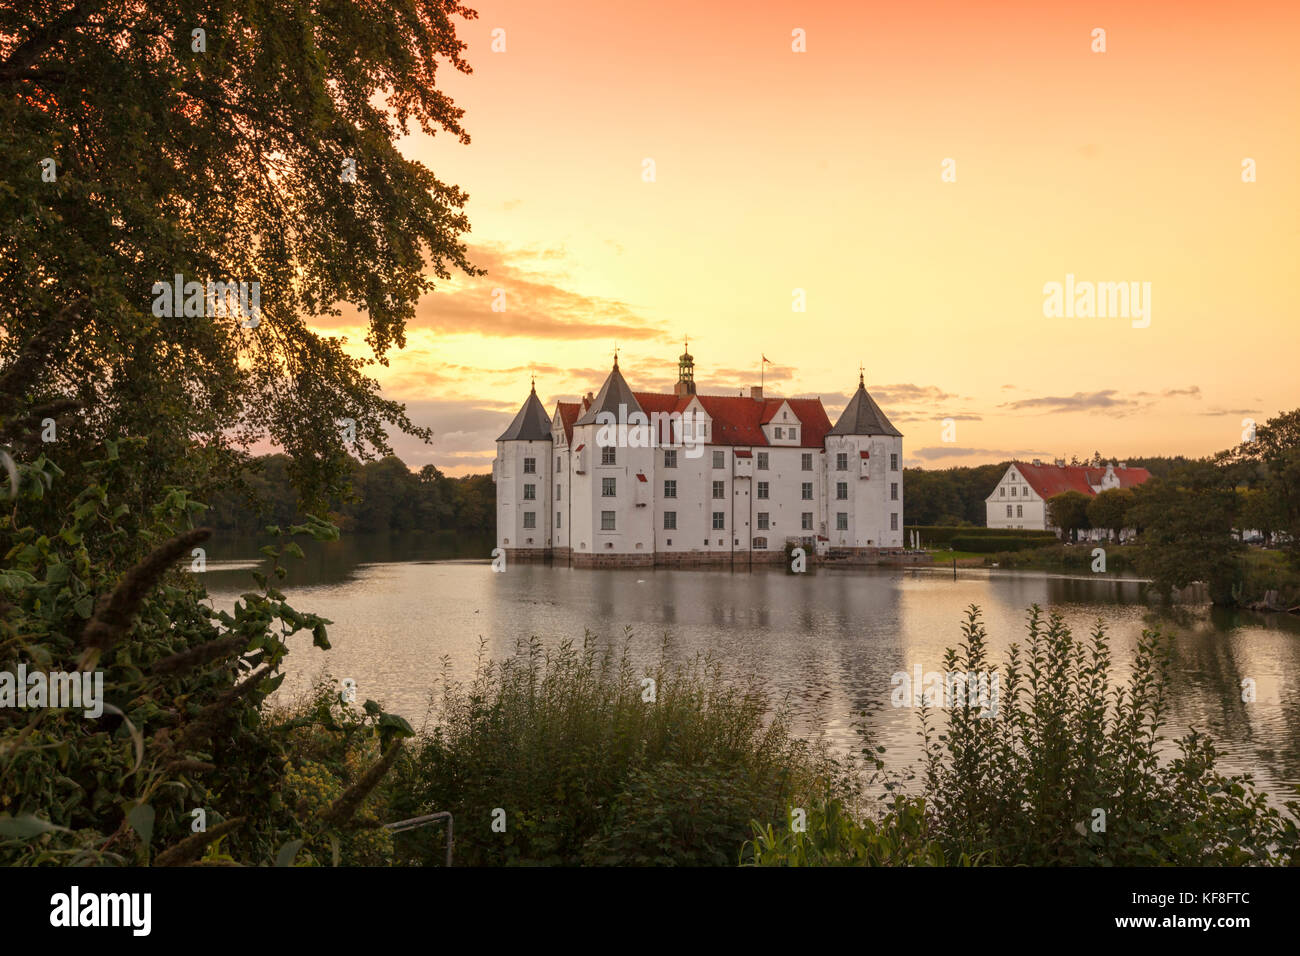 Glücksburg water castle near Flensburg, Germany, at sunset Stock Photo